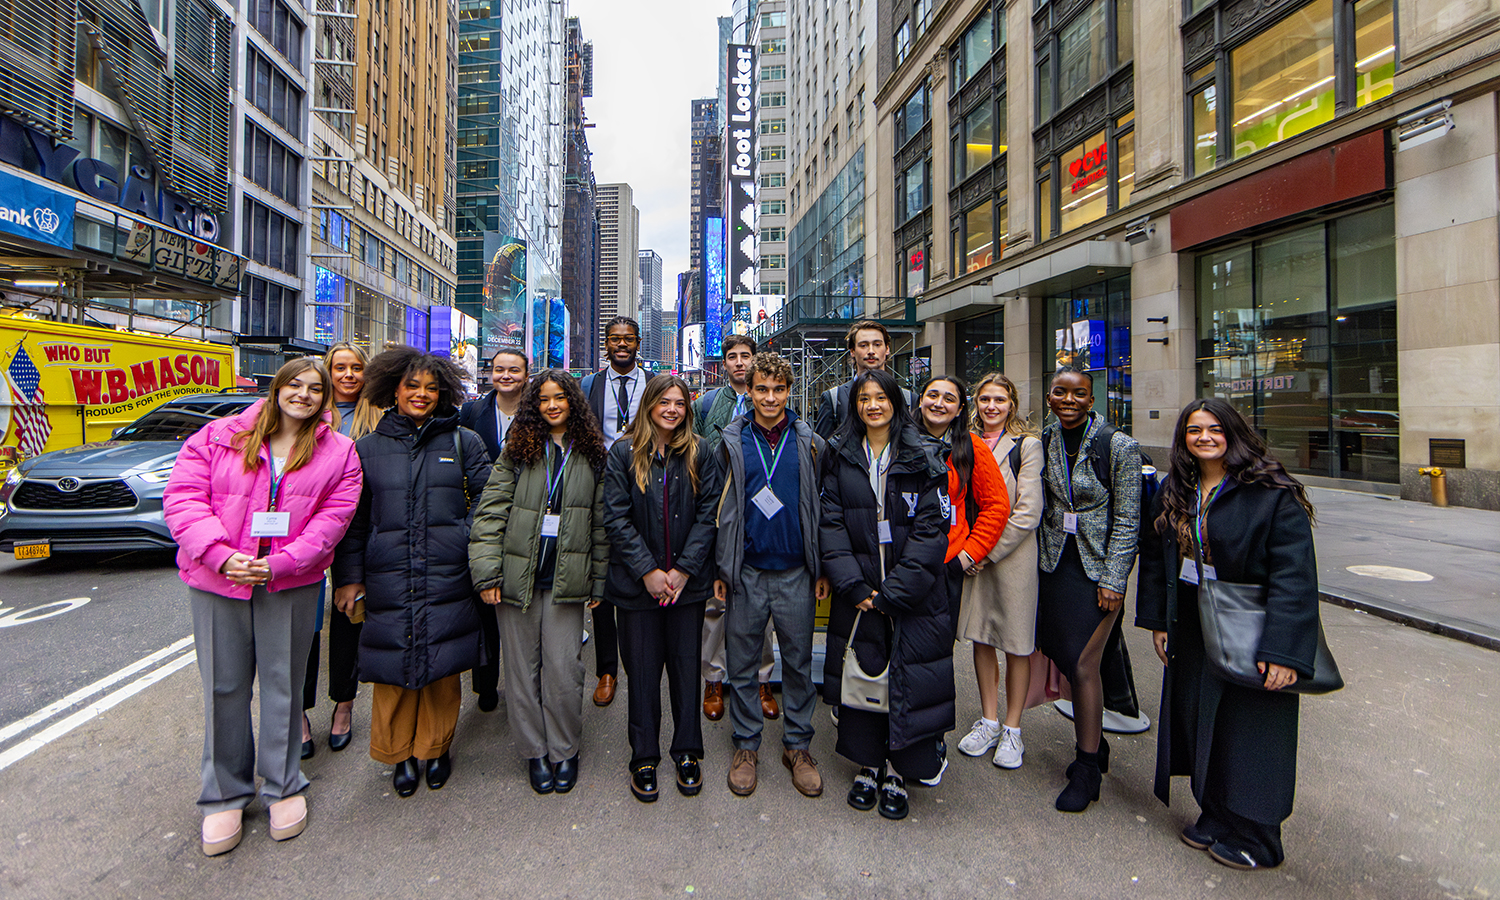 Group photo on nyc street